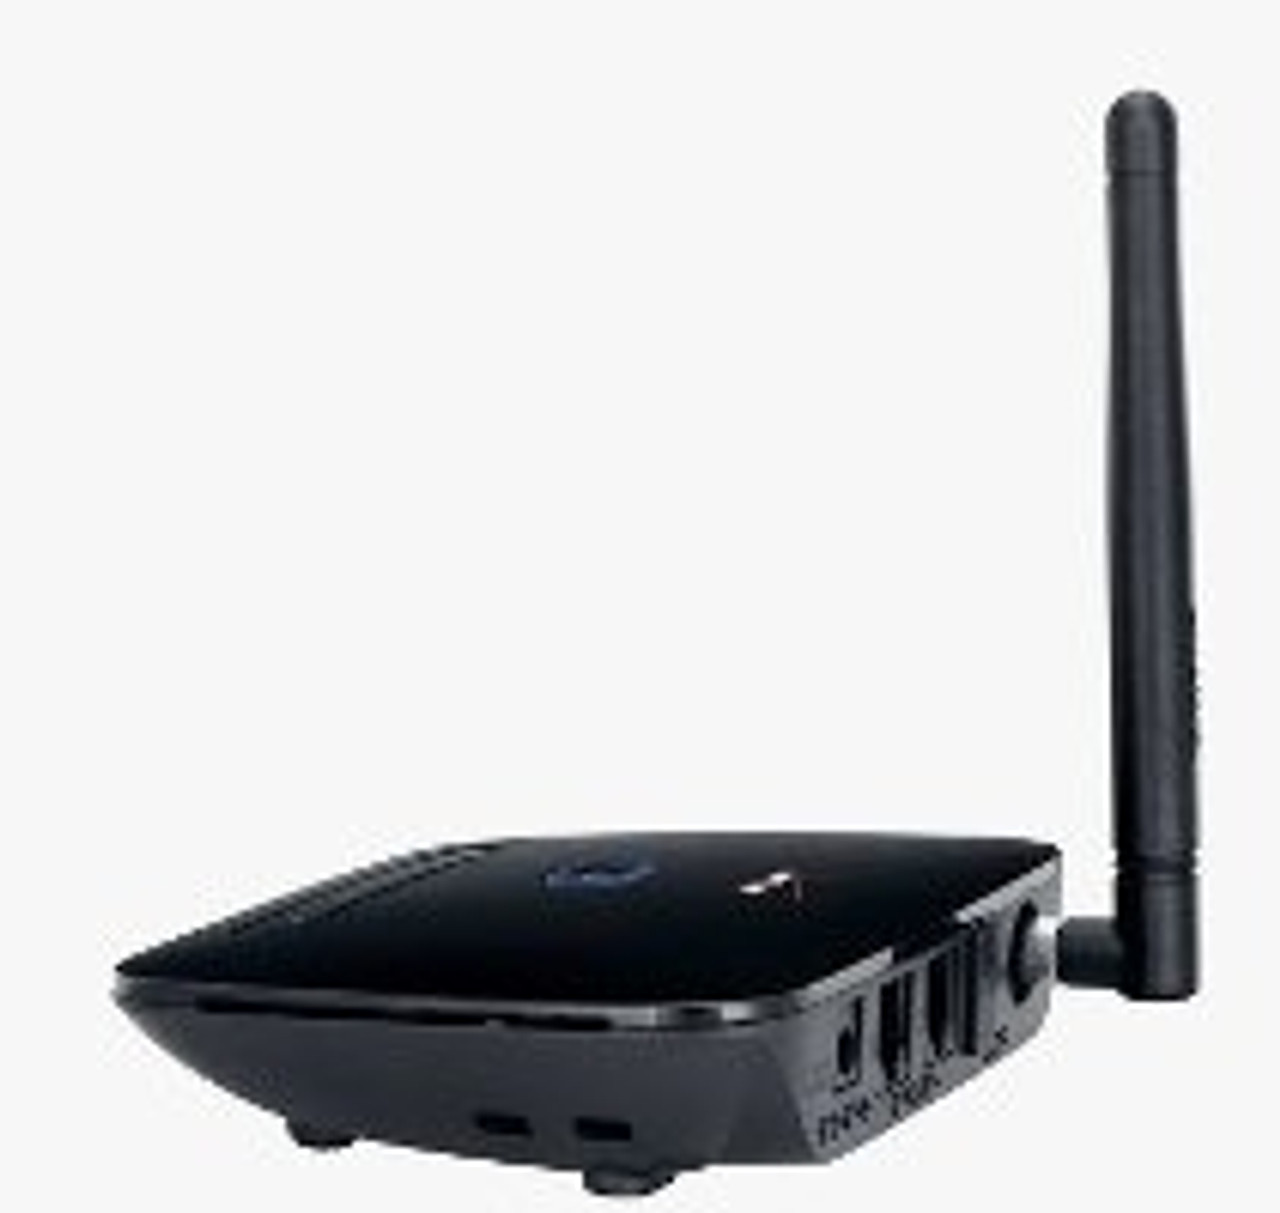 verizon wireless signal booster review